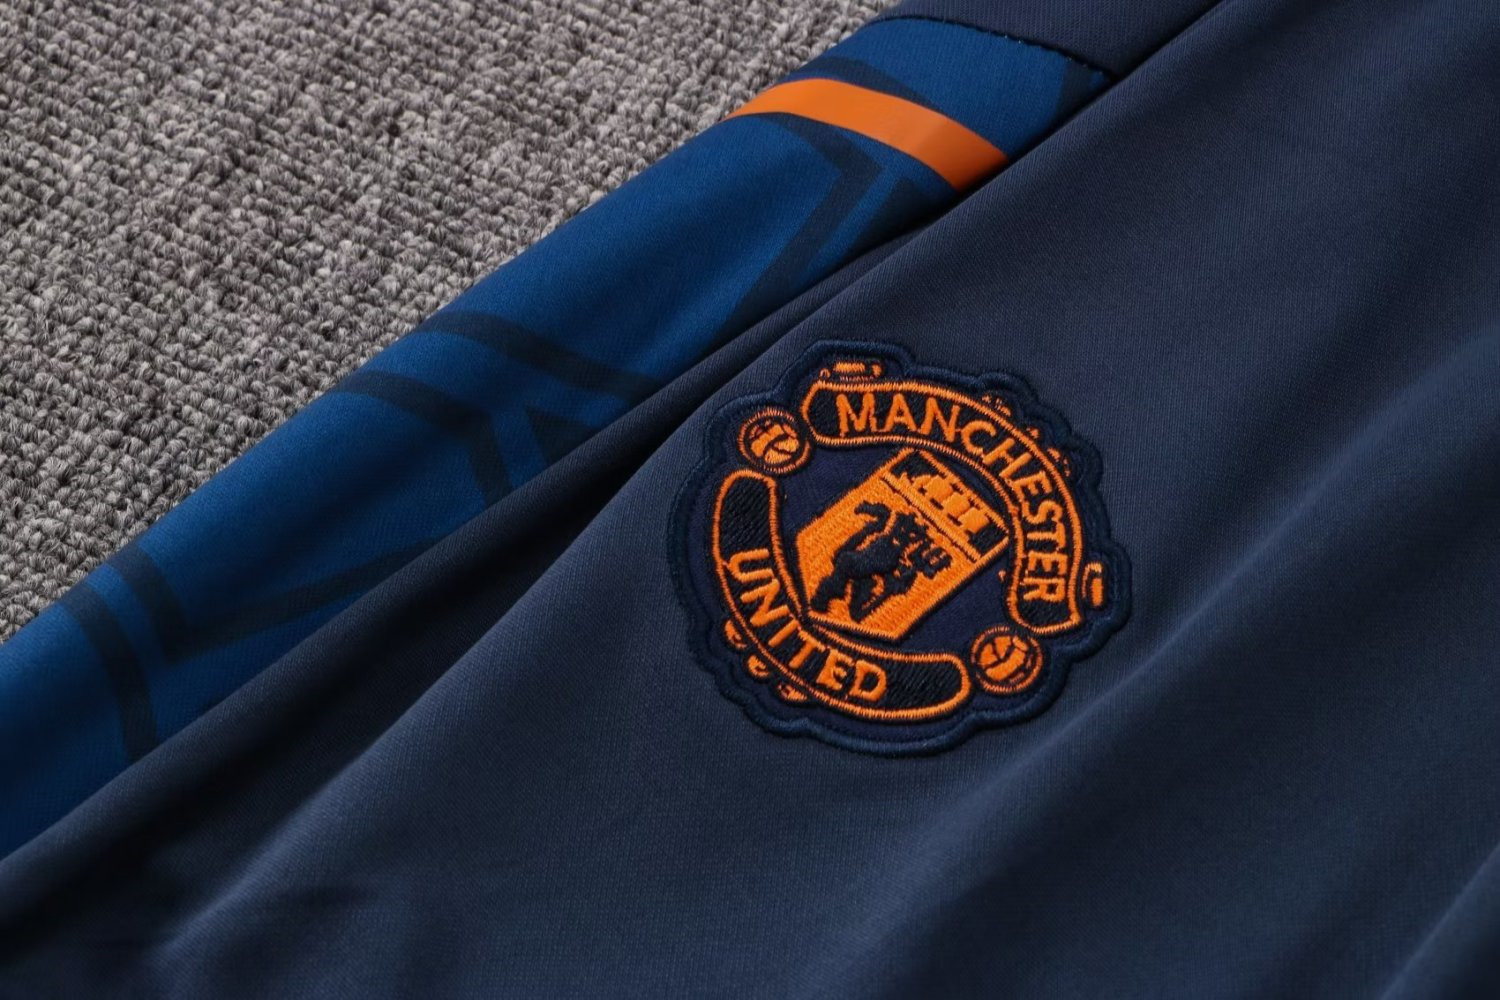 Manchester United Soccer Training Suit Replica Deep Blue 2021/22 Men's